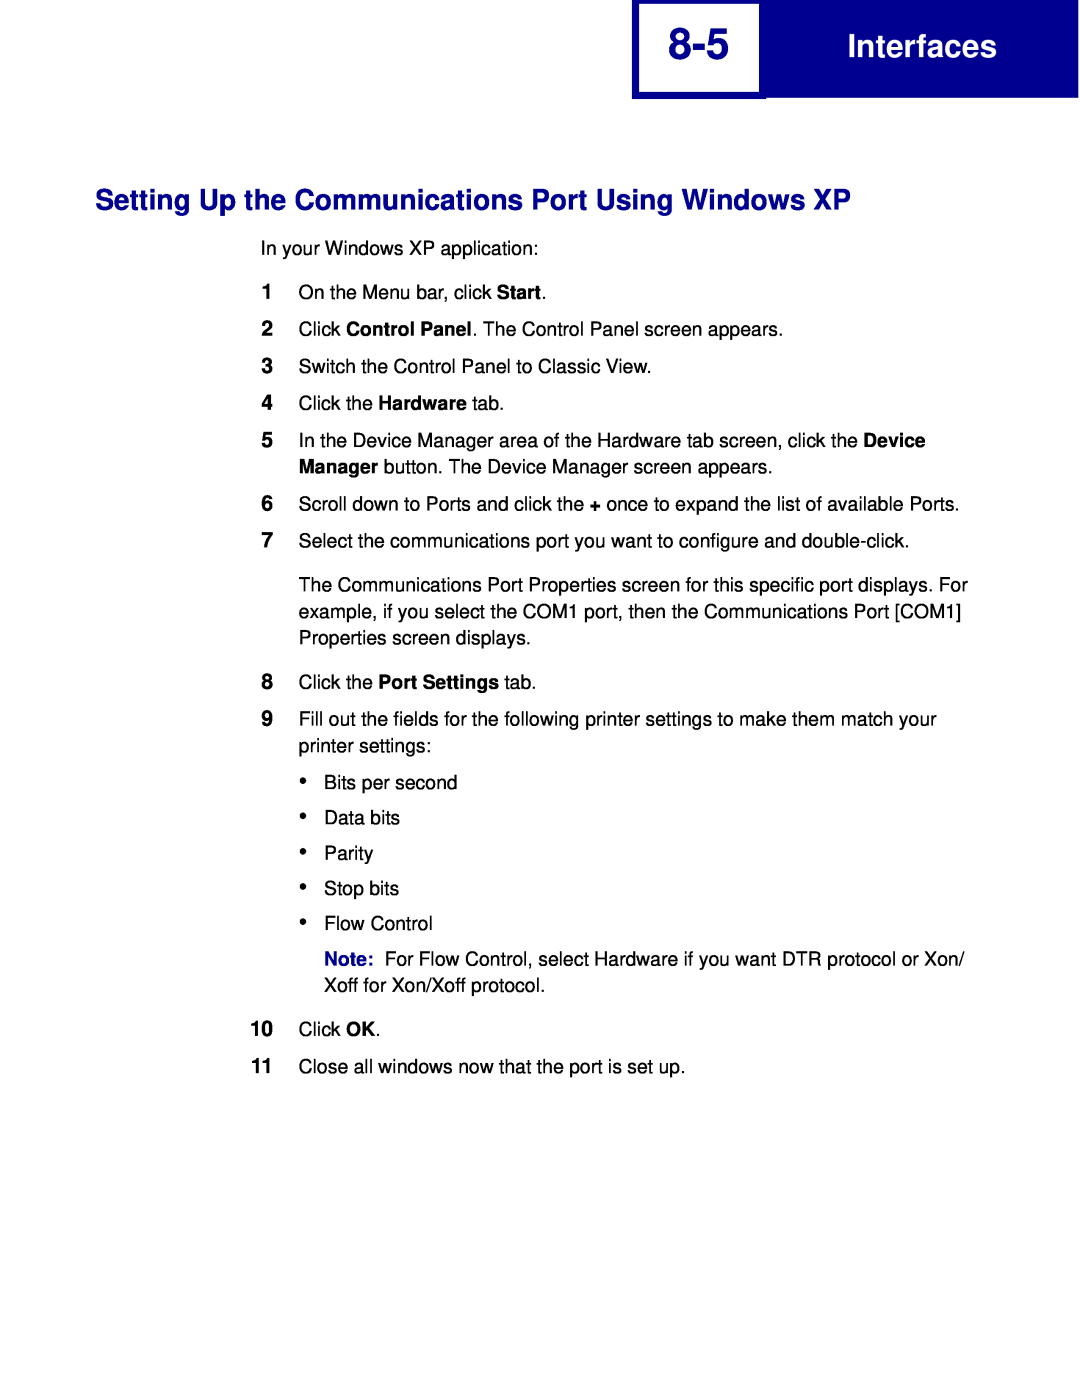 Lexmark C762, C760 manual Setting Up the Communications Port Using Windows XP, Interfaces 